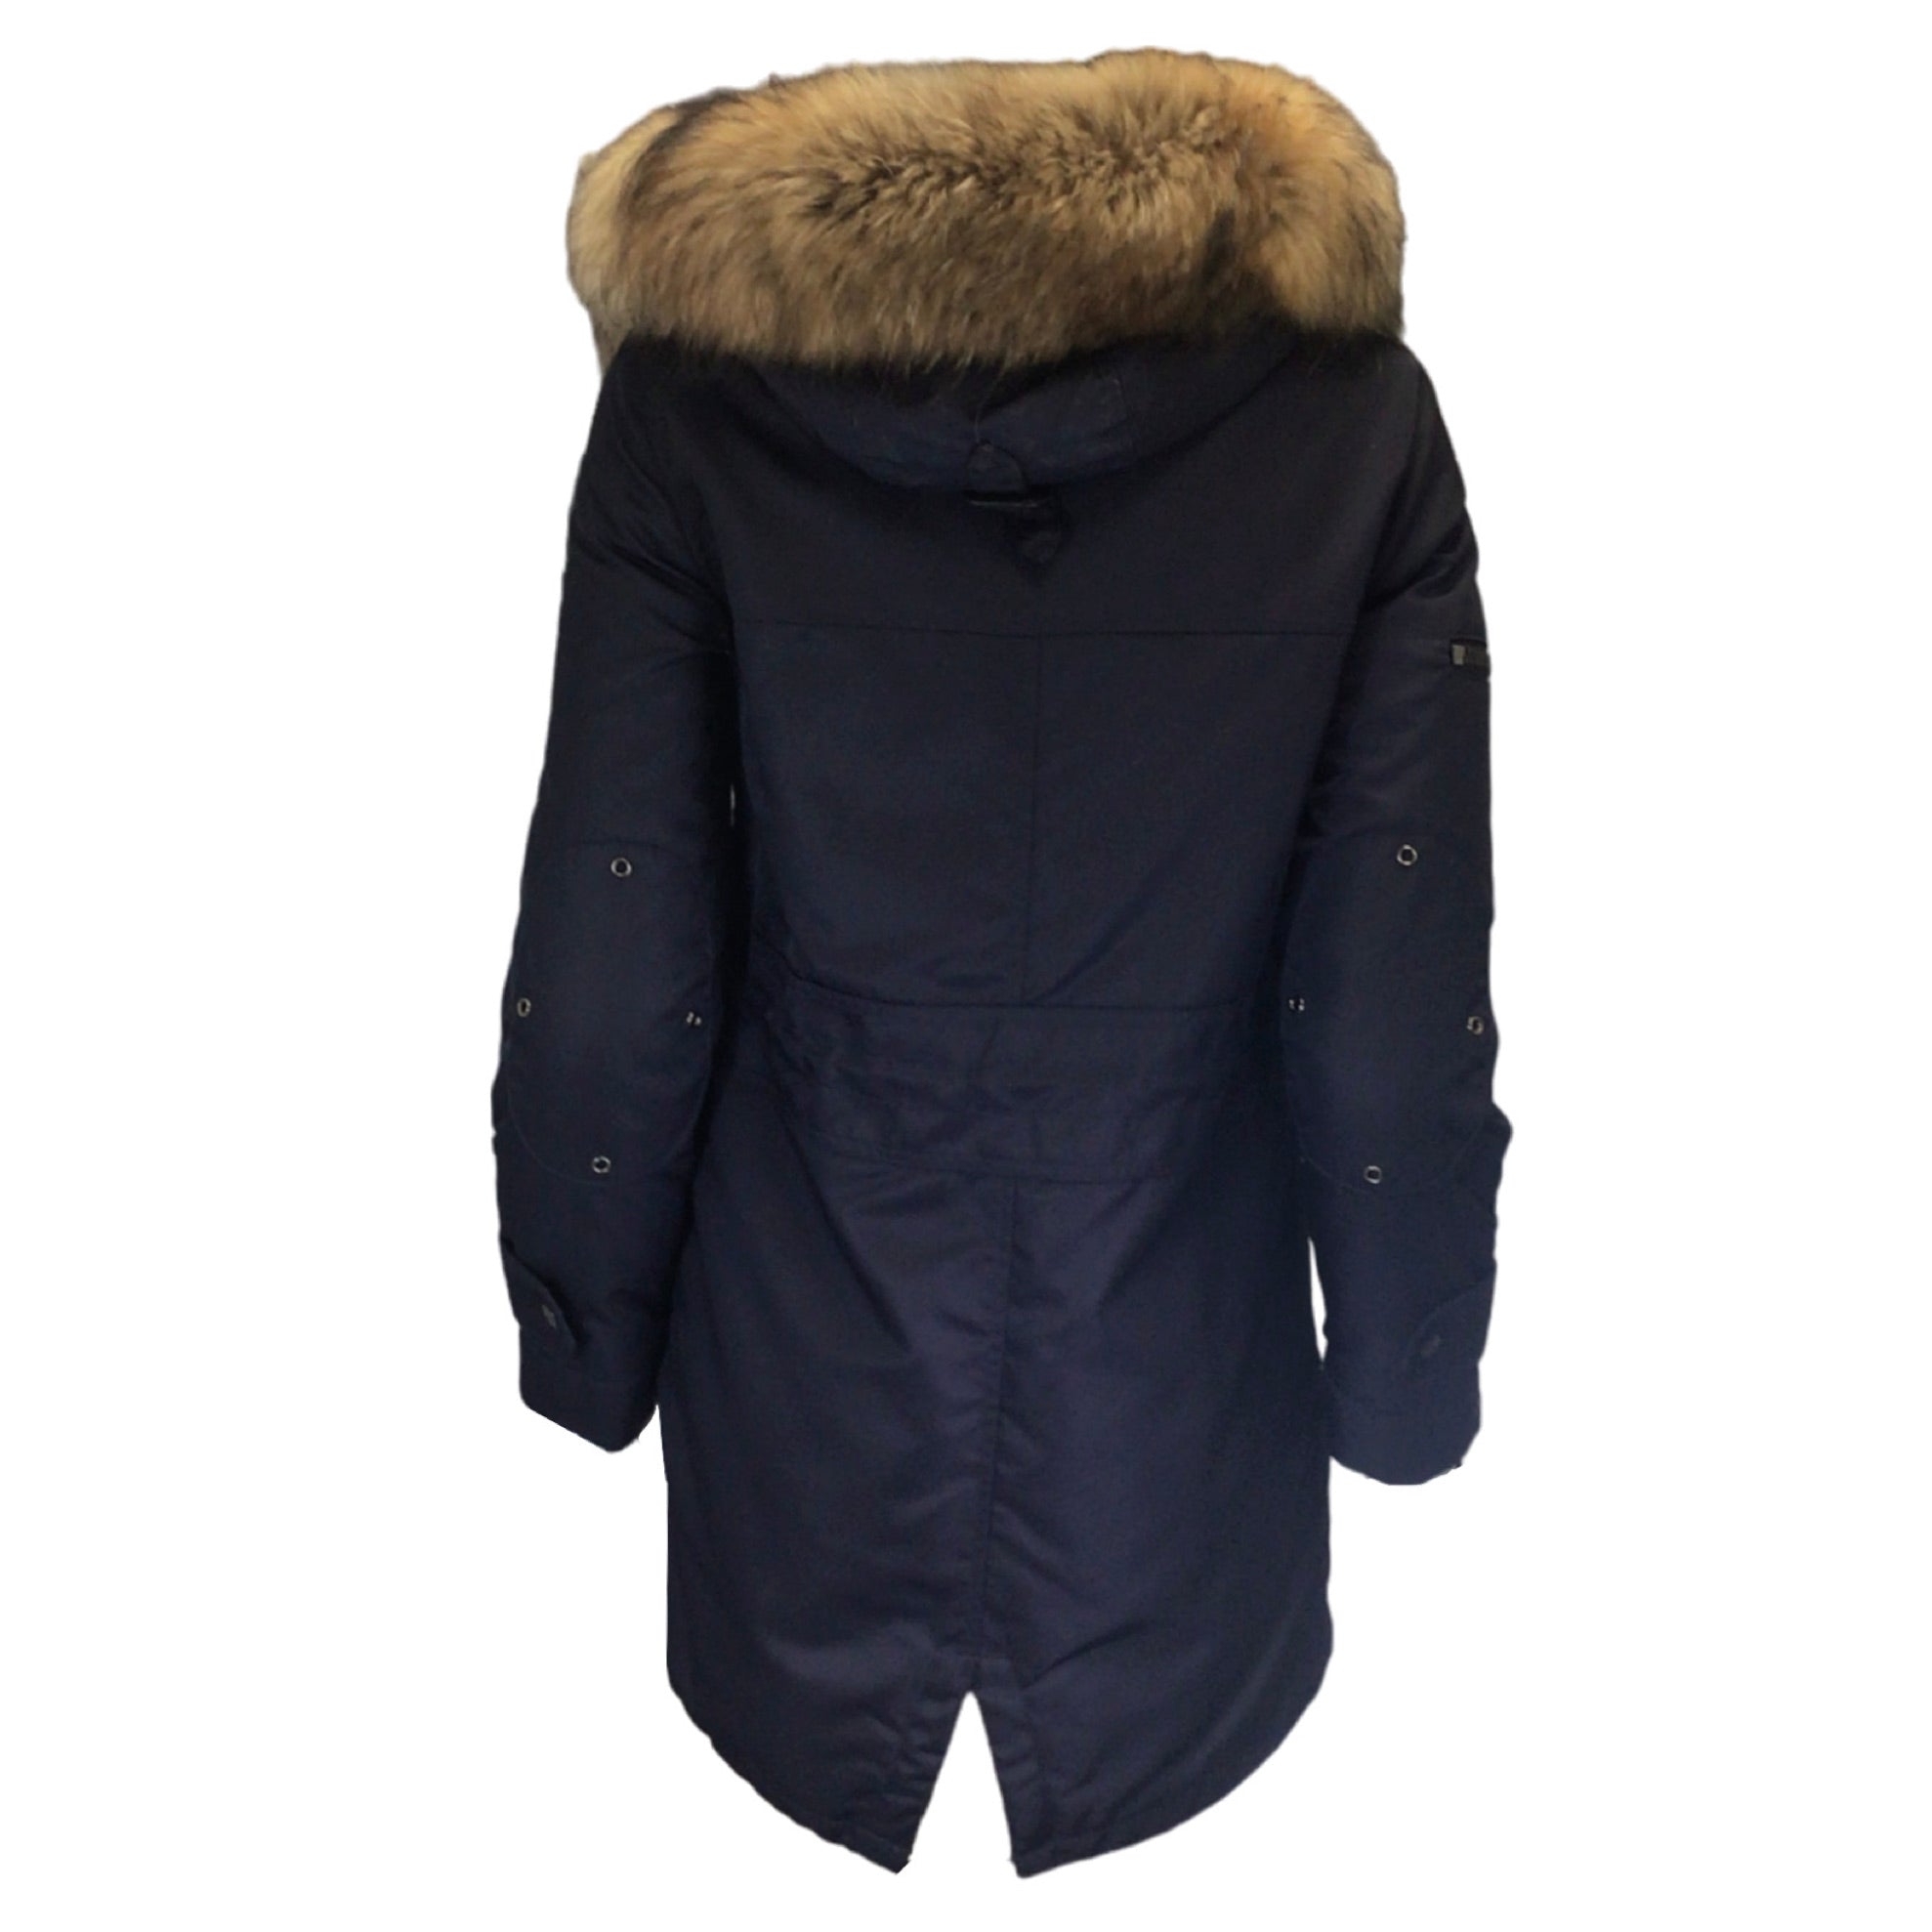 SAM. Navy Blue / Tan Raccoon Fur Trimmed Hooded Nylon Puffer Coat